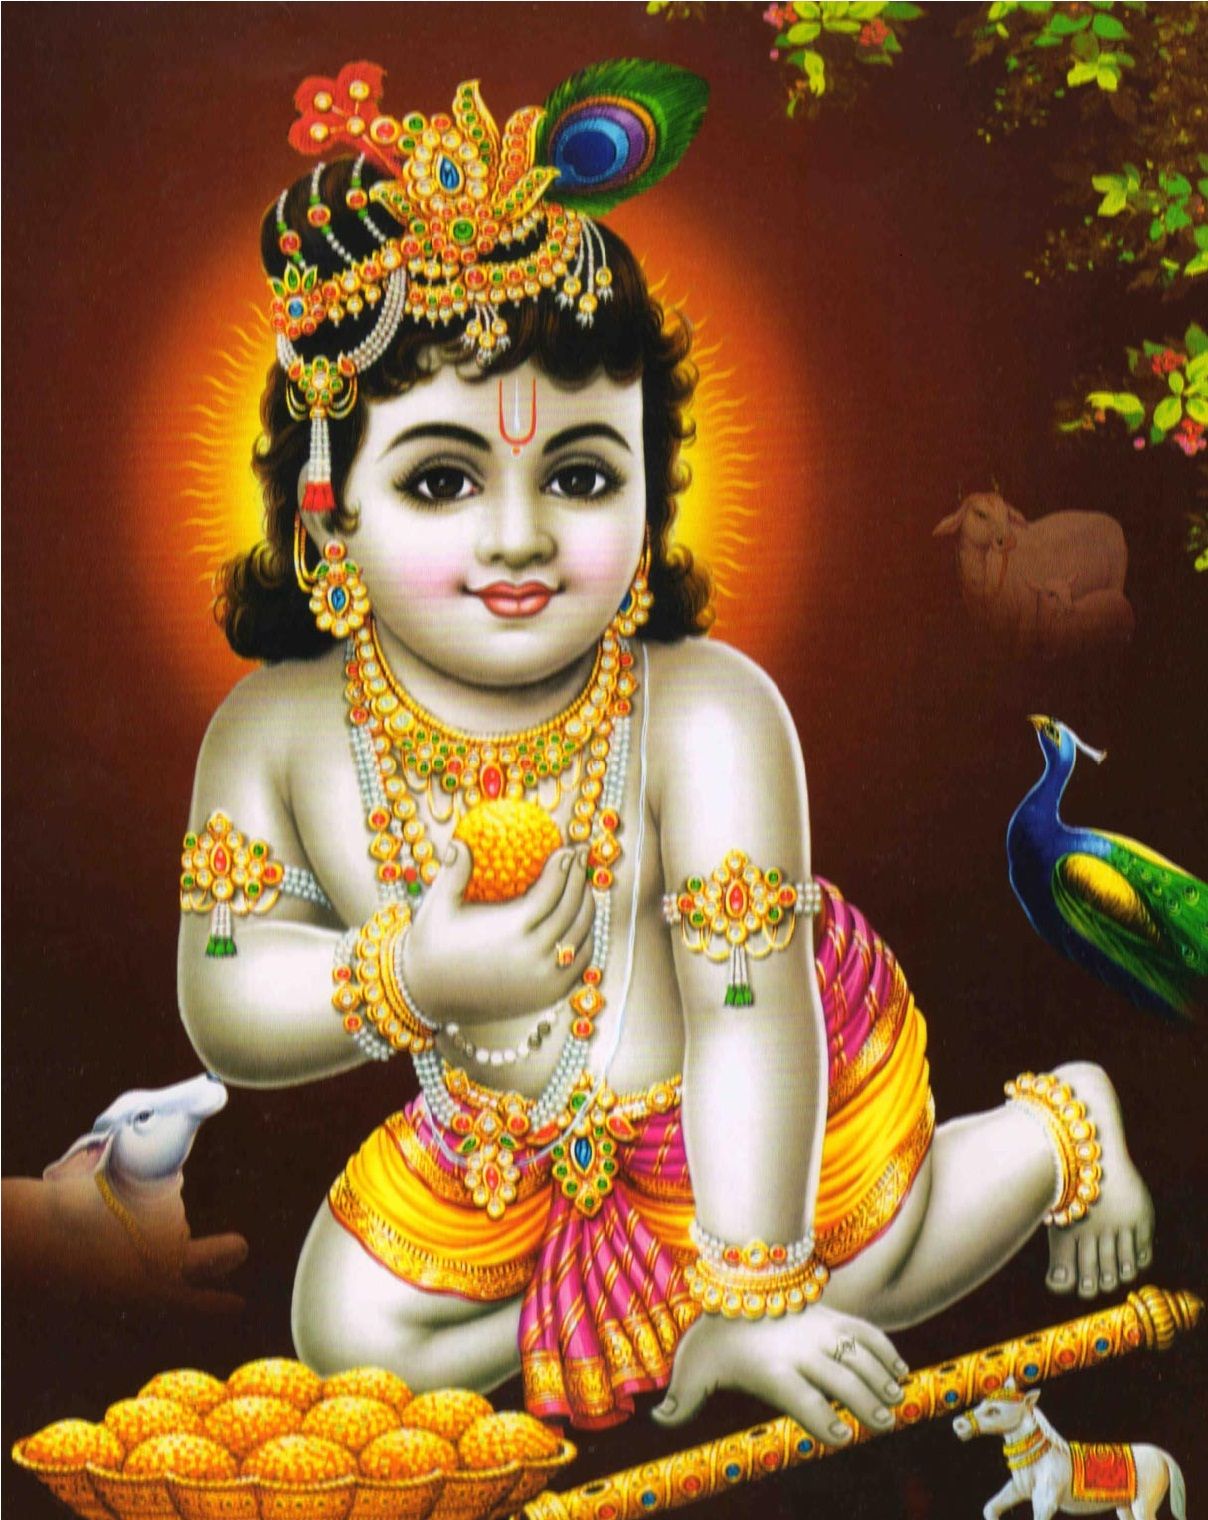 Hindu God Wallpapers For Mobile Phones, God Images - God Images Download - HD Wallpaper 